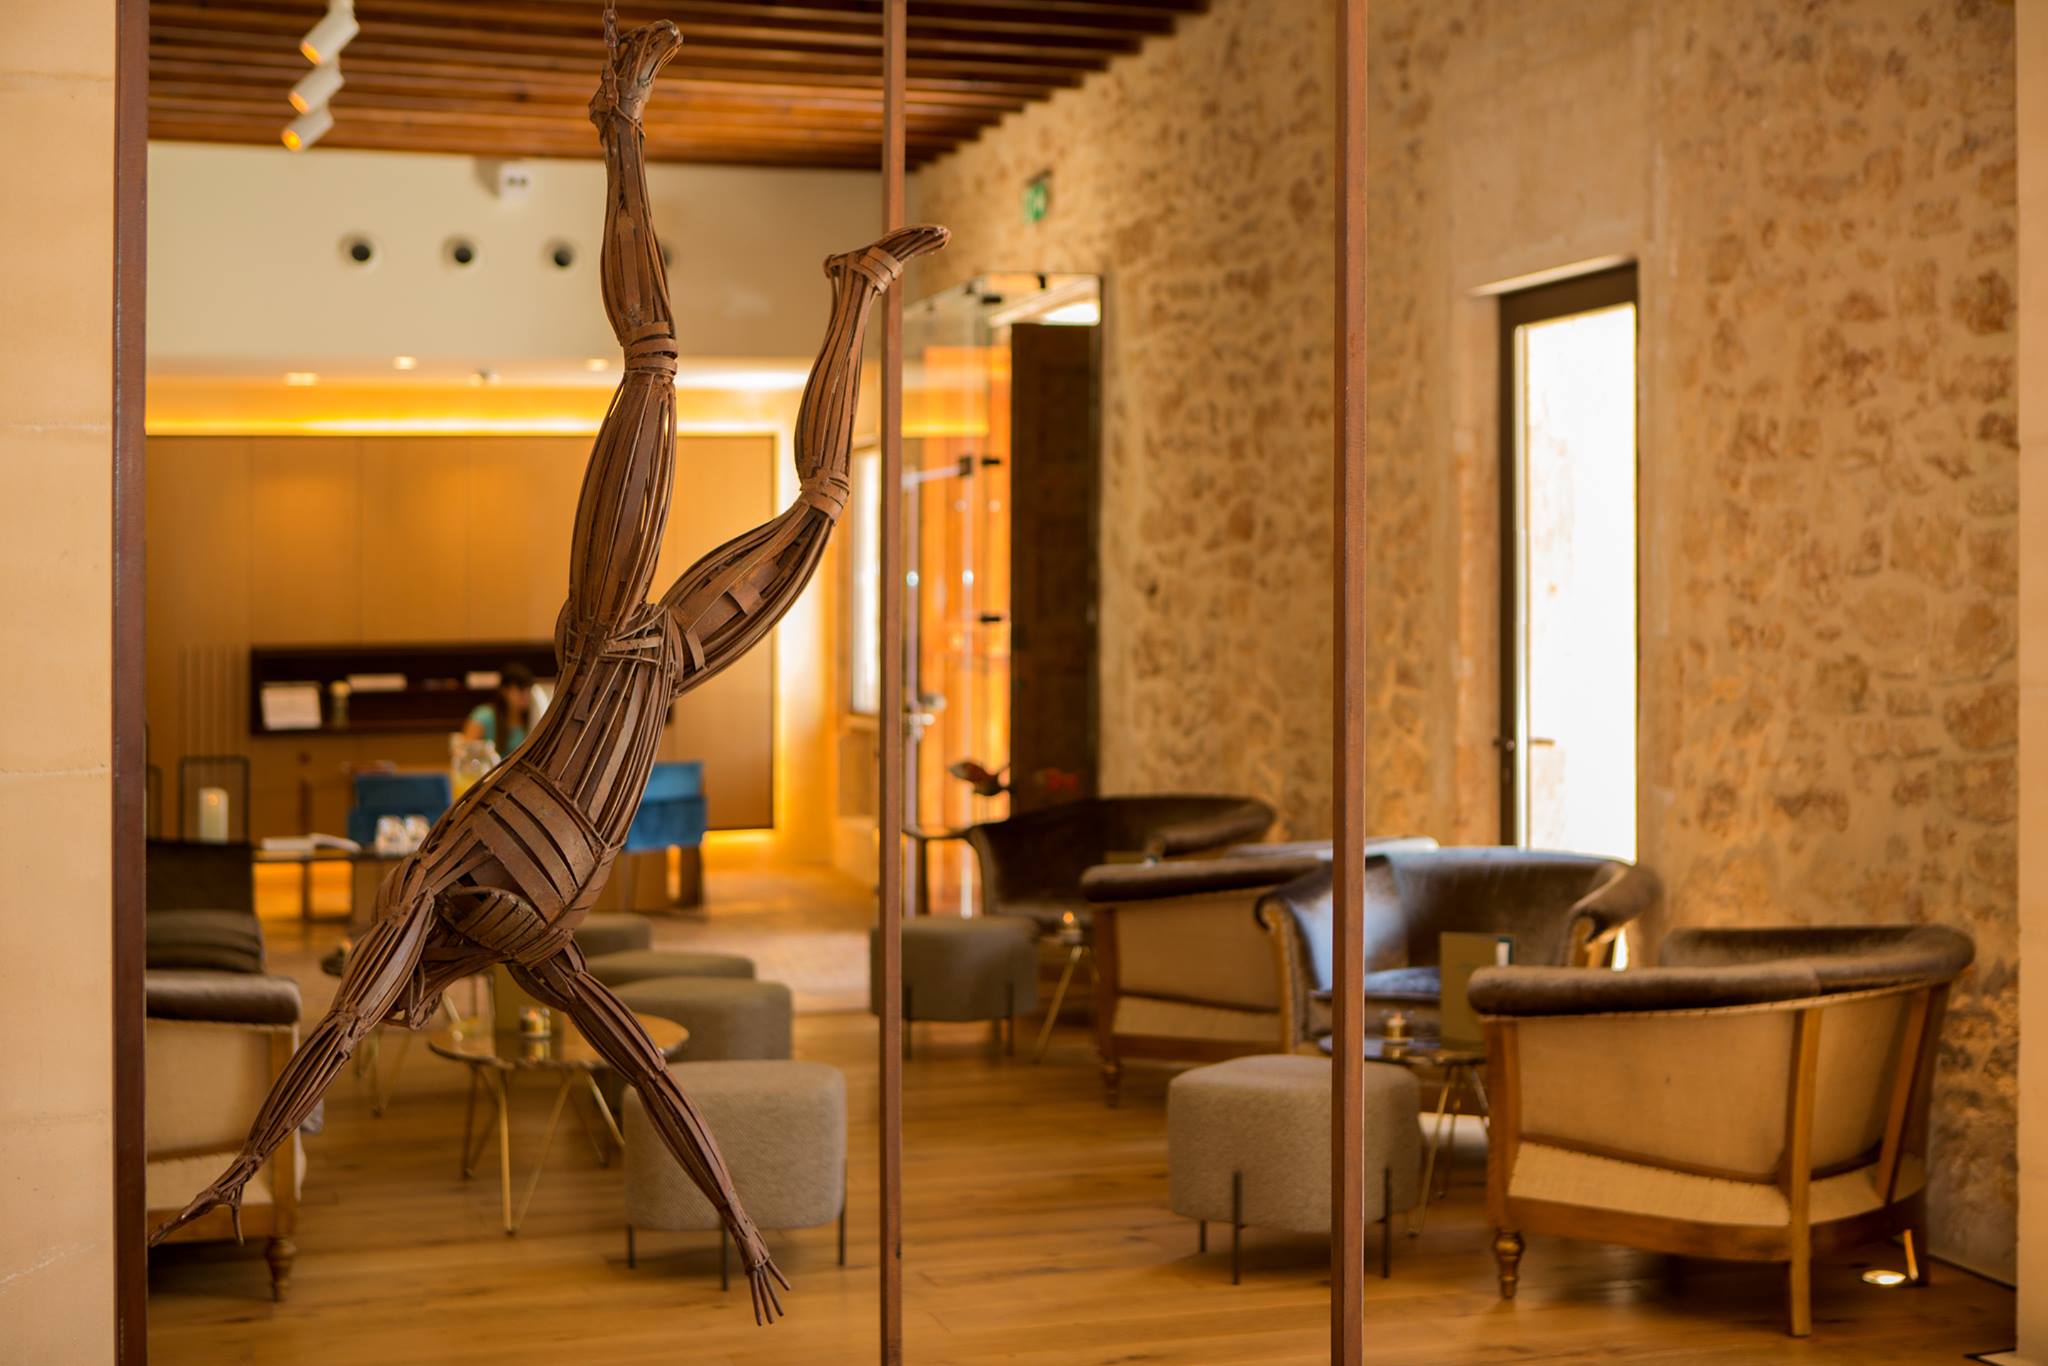 Enjoy the art works at Sa Creu Nova luxury hotel - Mallorca